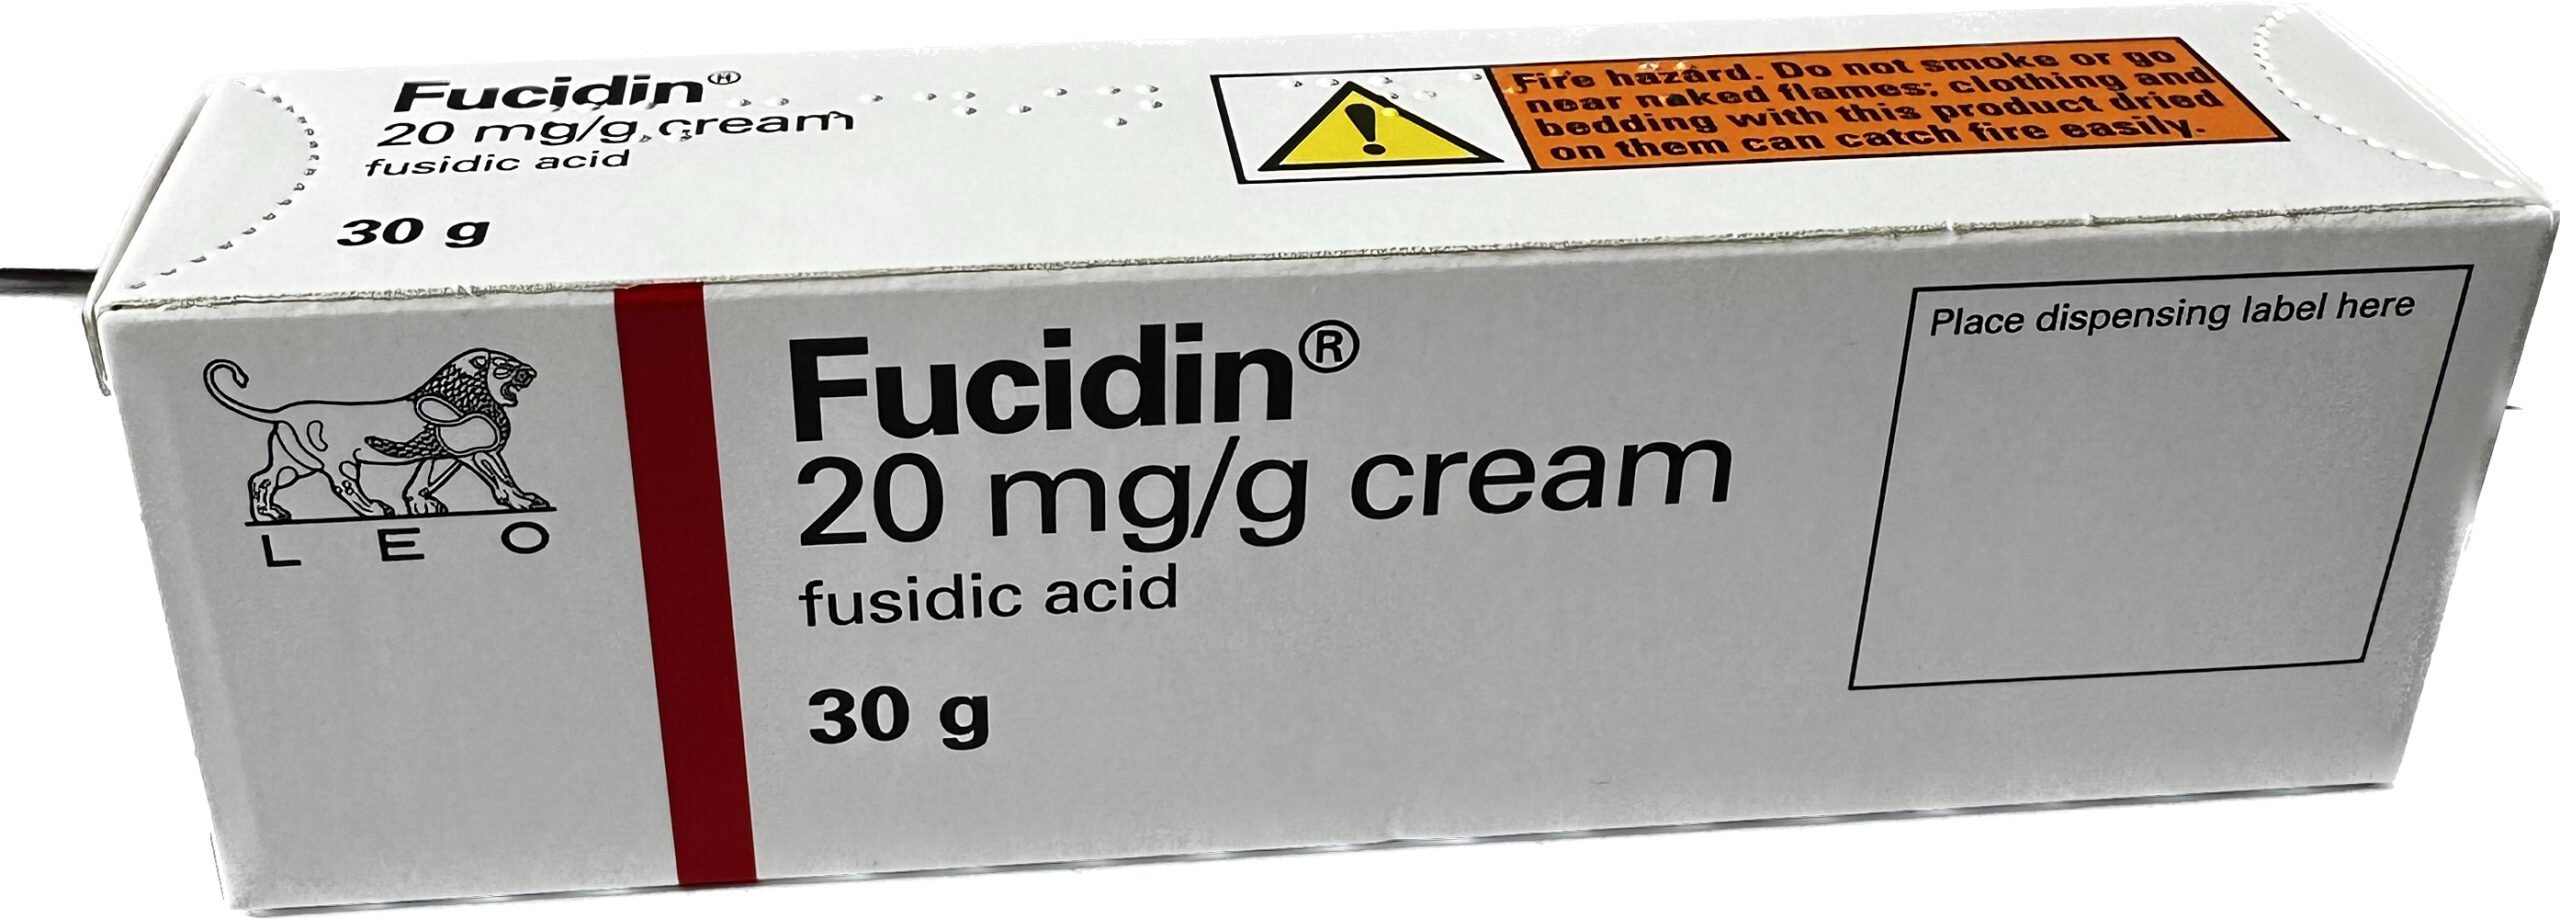 Fusidin fusidic acid cream